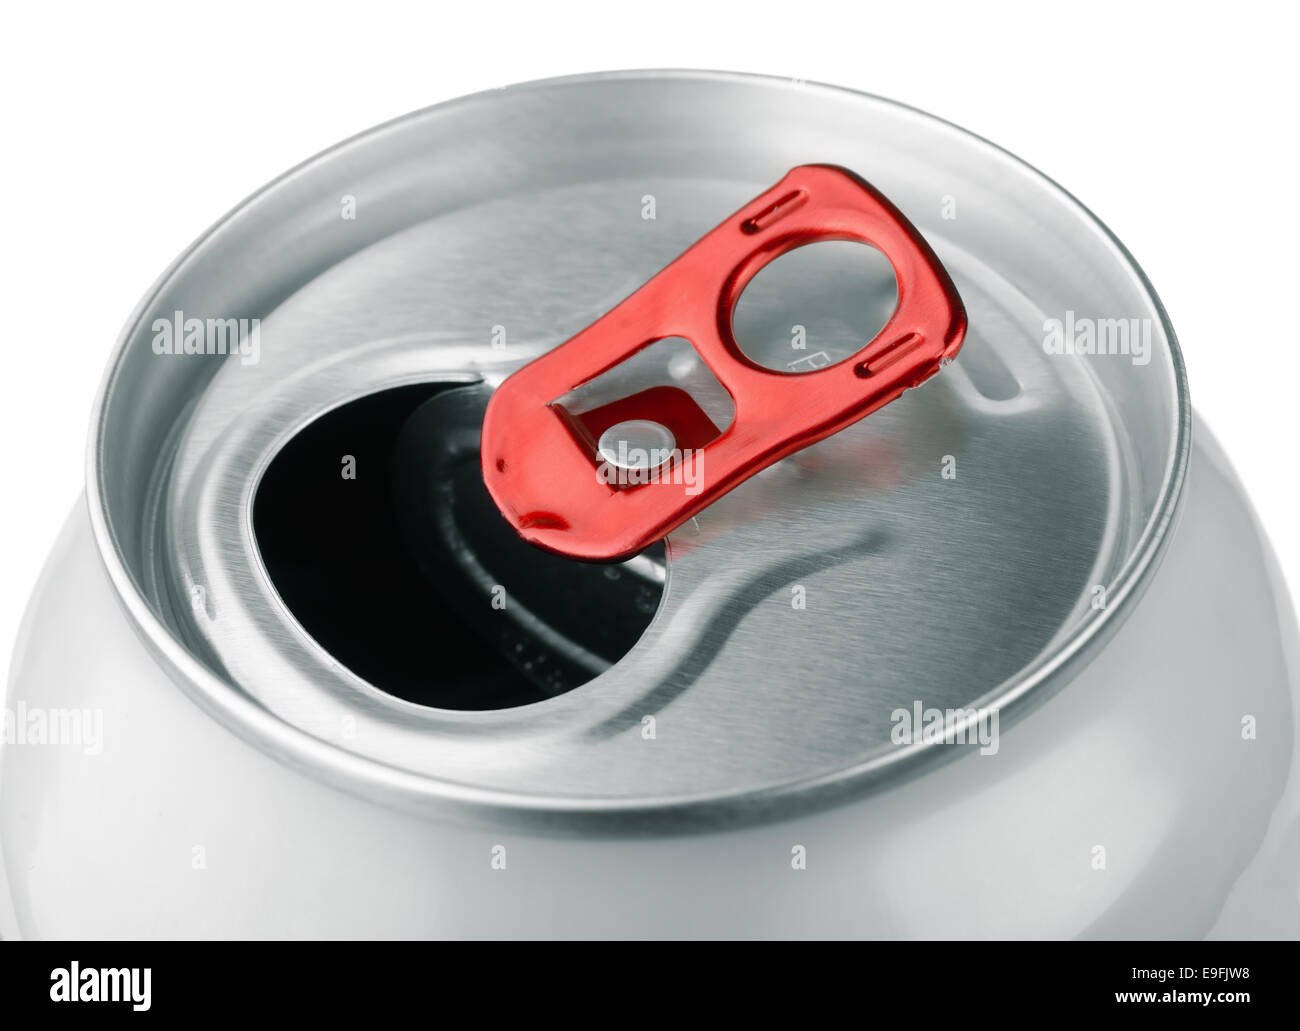 Soda can Stock Photo